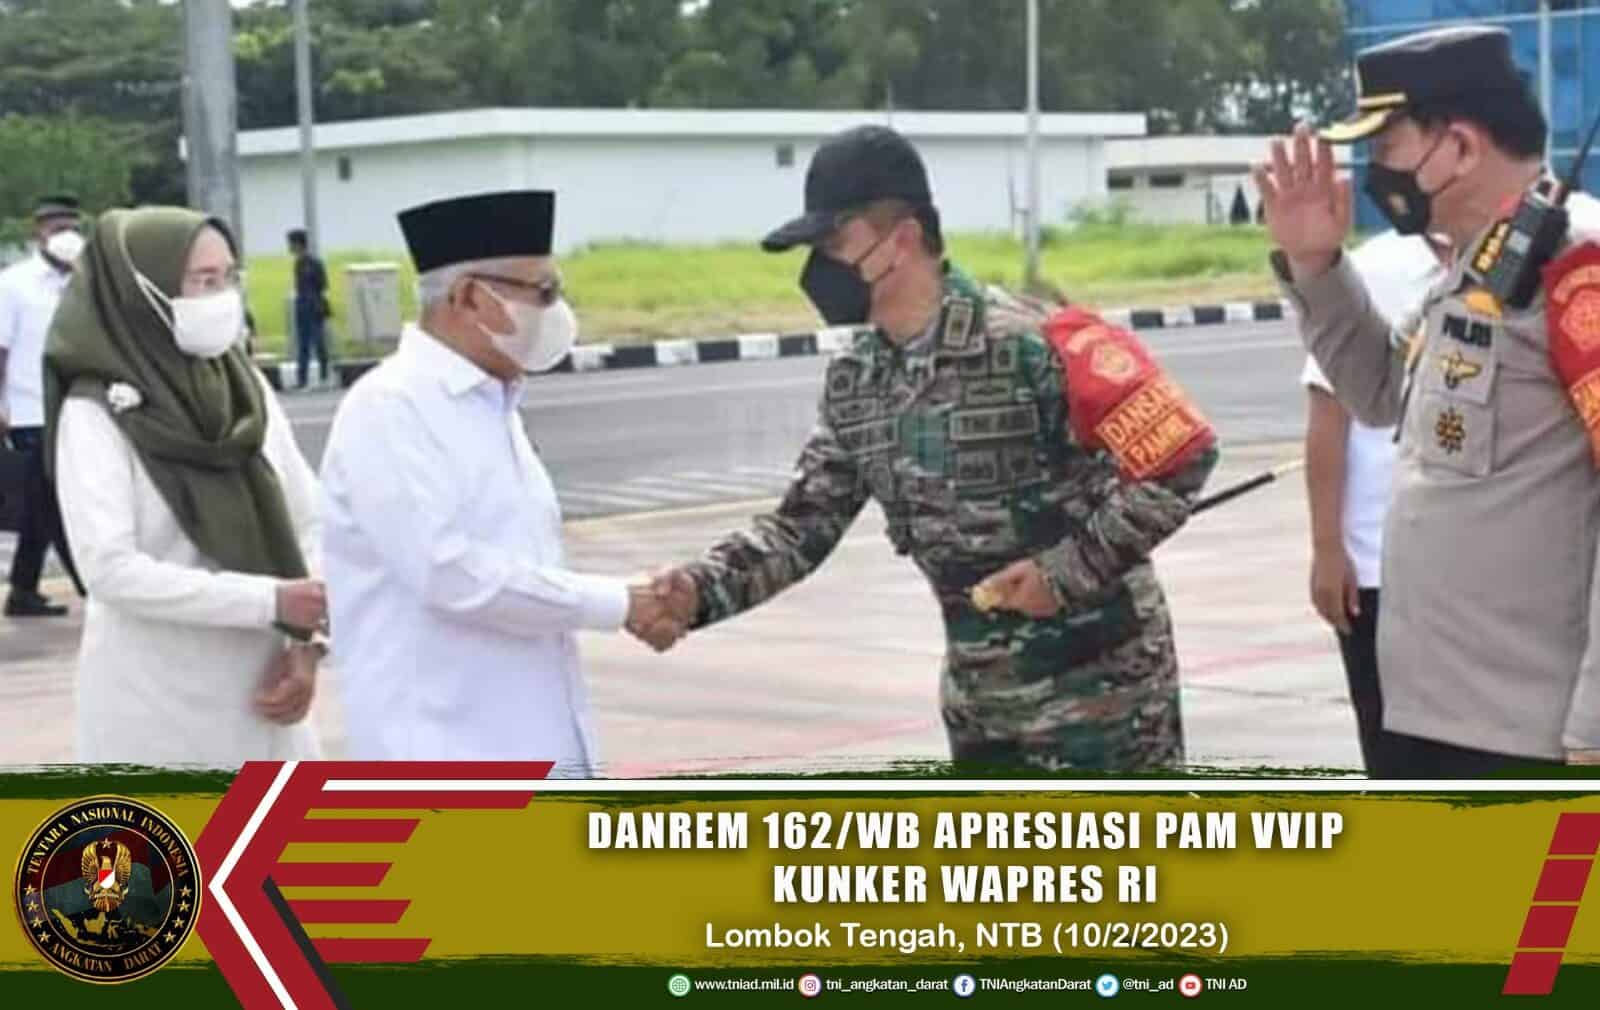 Danrem 162/WB Apresiasi Pam VVIP Kunker Wapres RI di Lombok Tengah